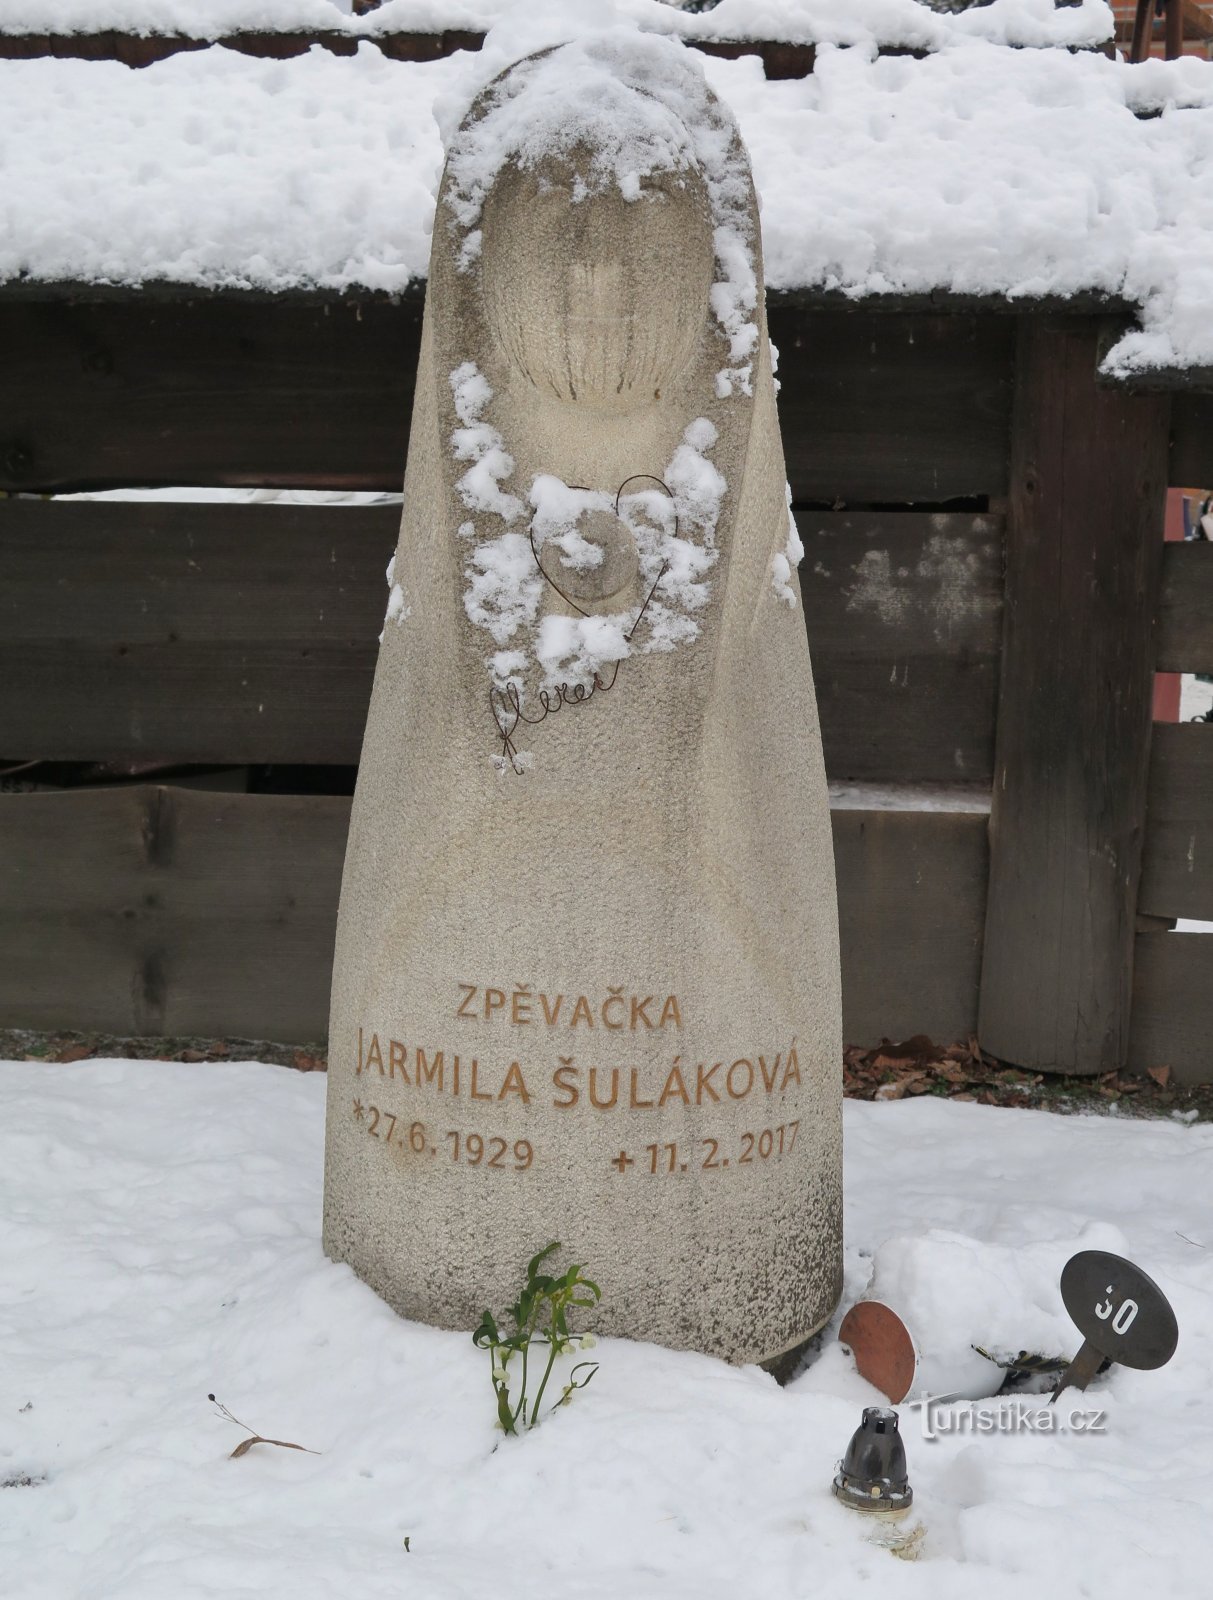 Rožnov pod Radhoštěm – pamiątkowy grób królowej wołoskiej Jarmili Šulákovej